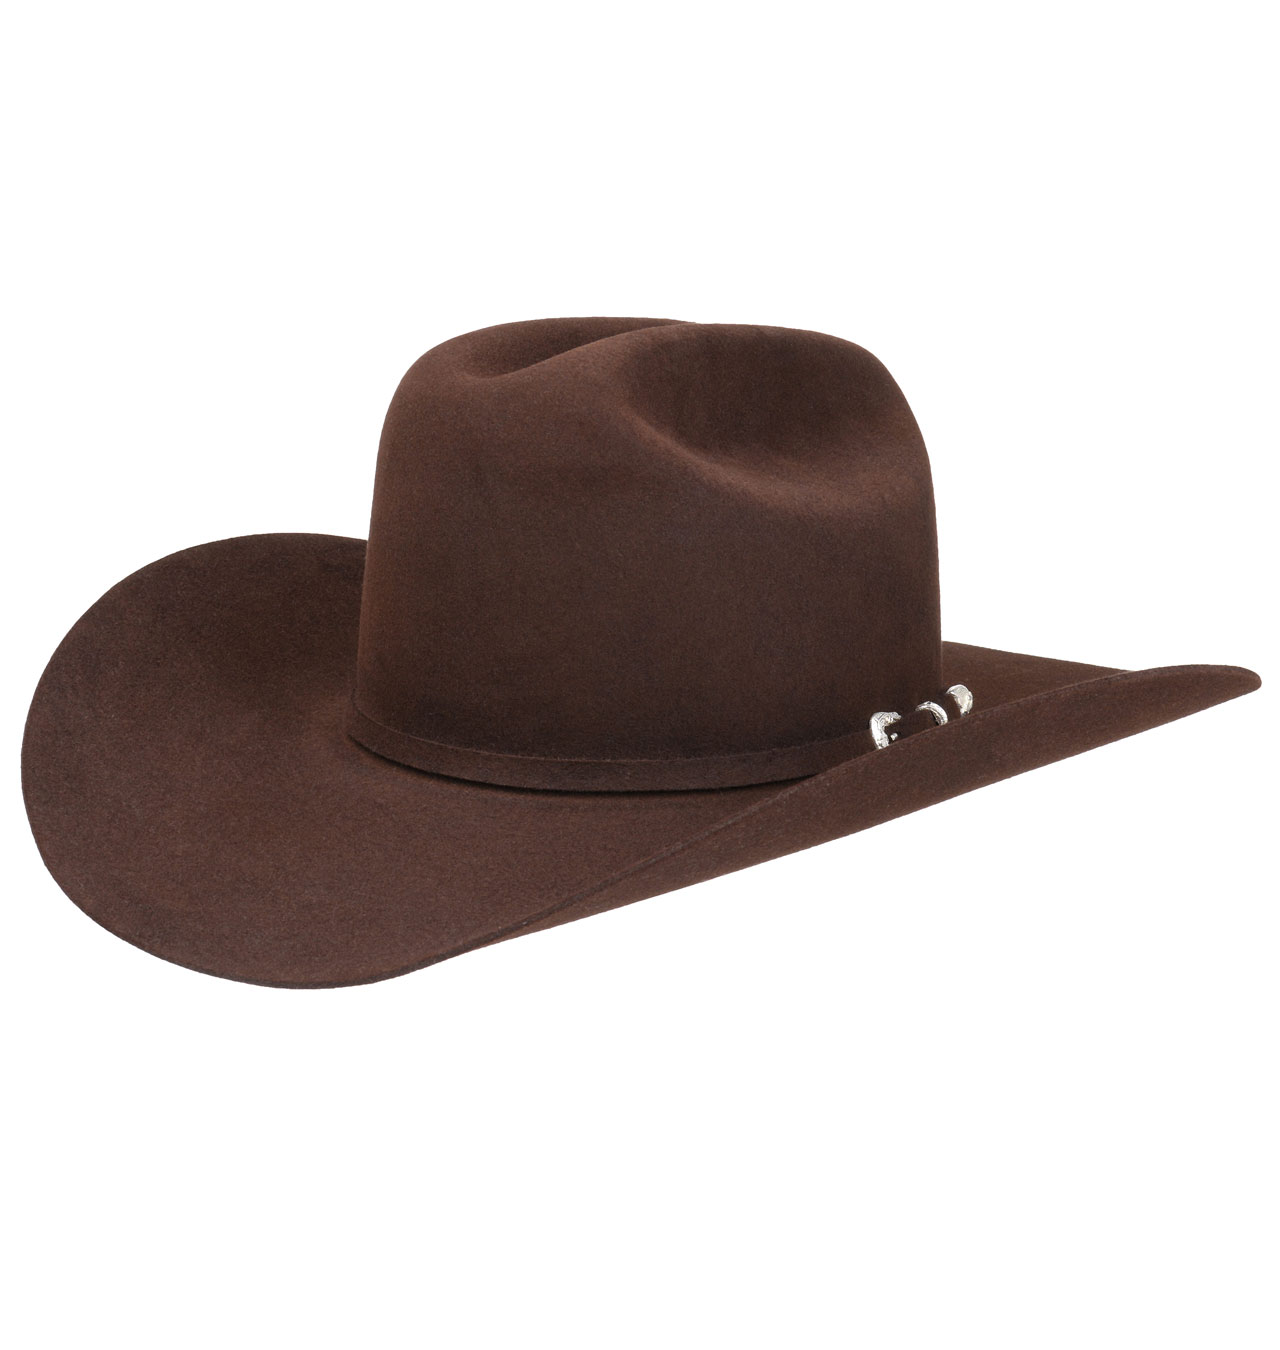 Stetson - 5X Lariat Western Cowboy Hat - Chocolate